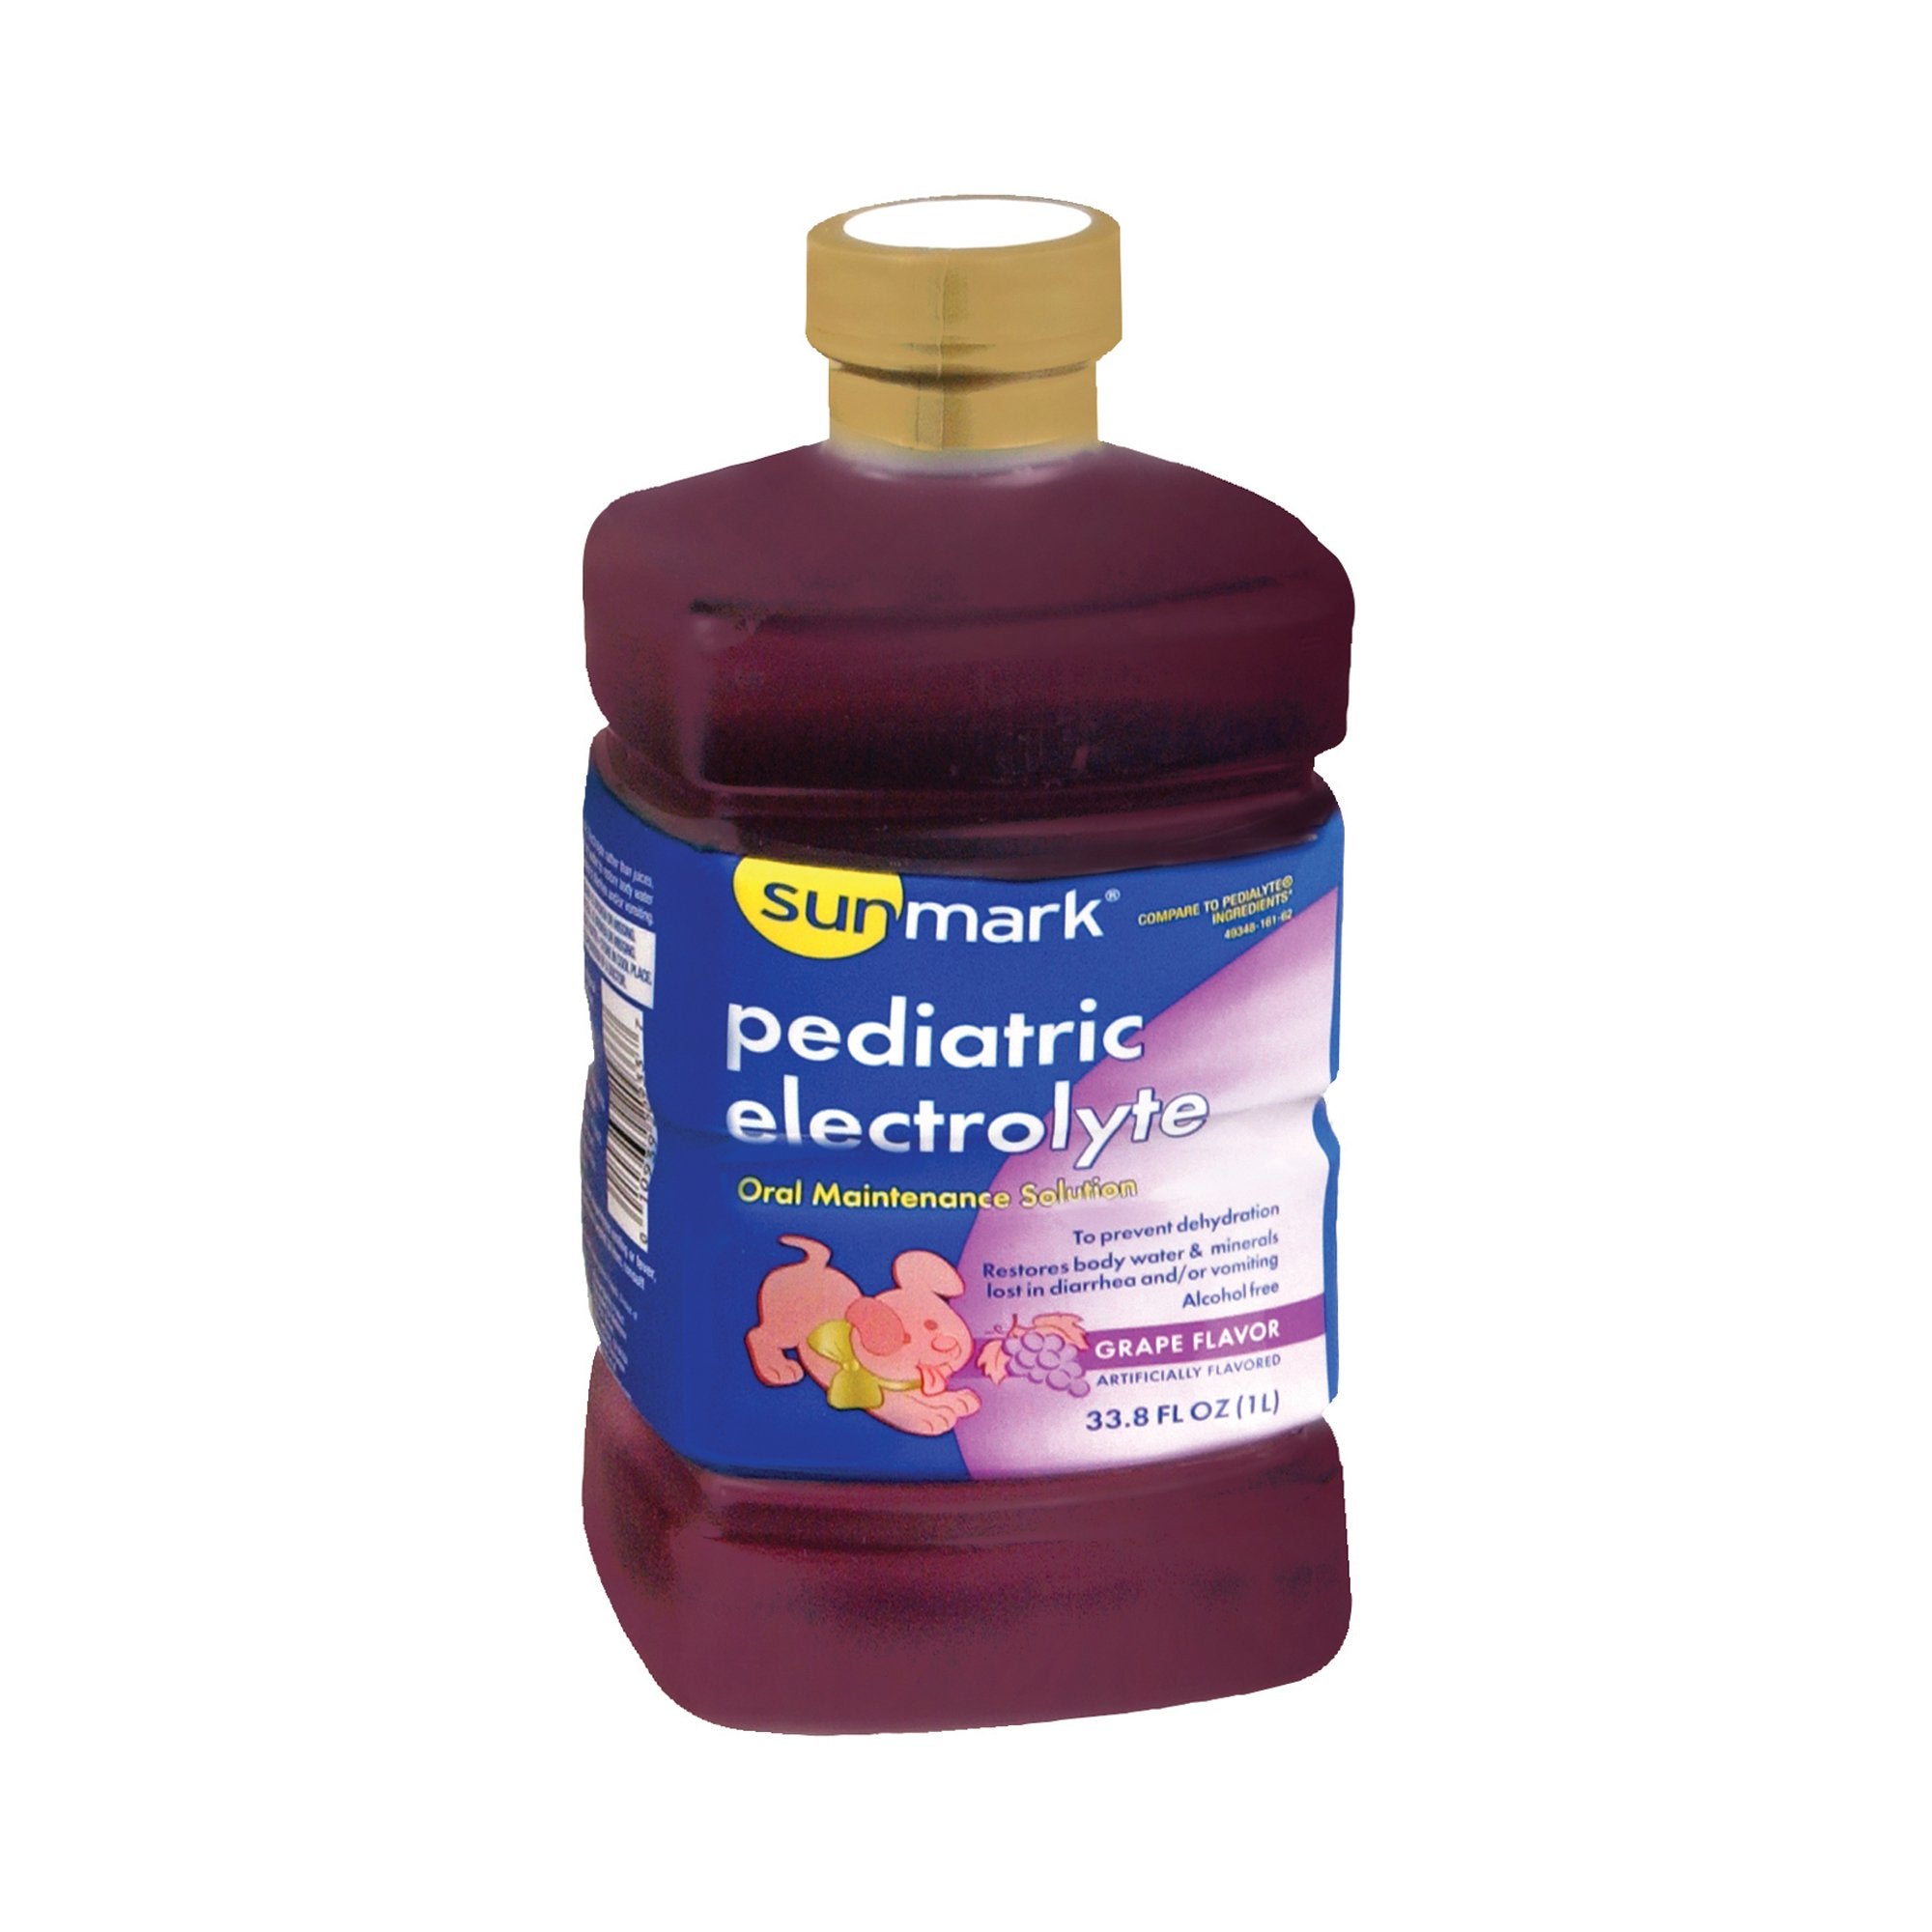 sunmark® Pediatric Electrolyte Grape Flavor, 33.8 oz. Bottle